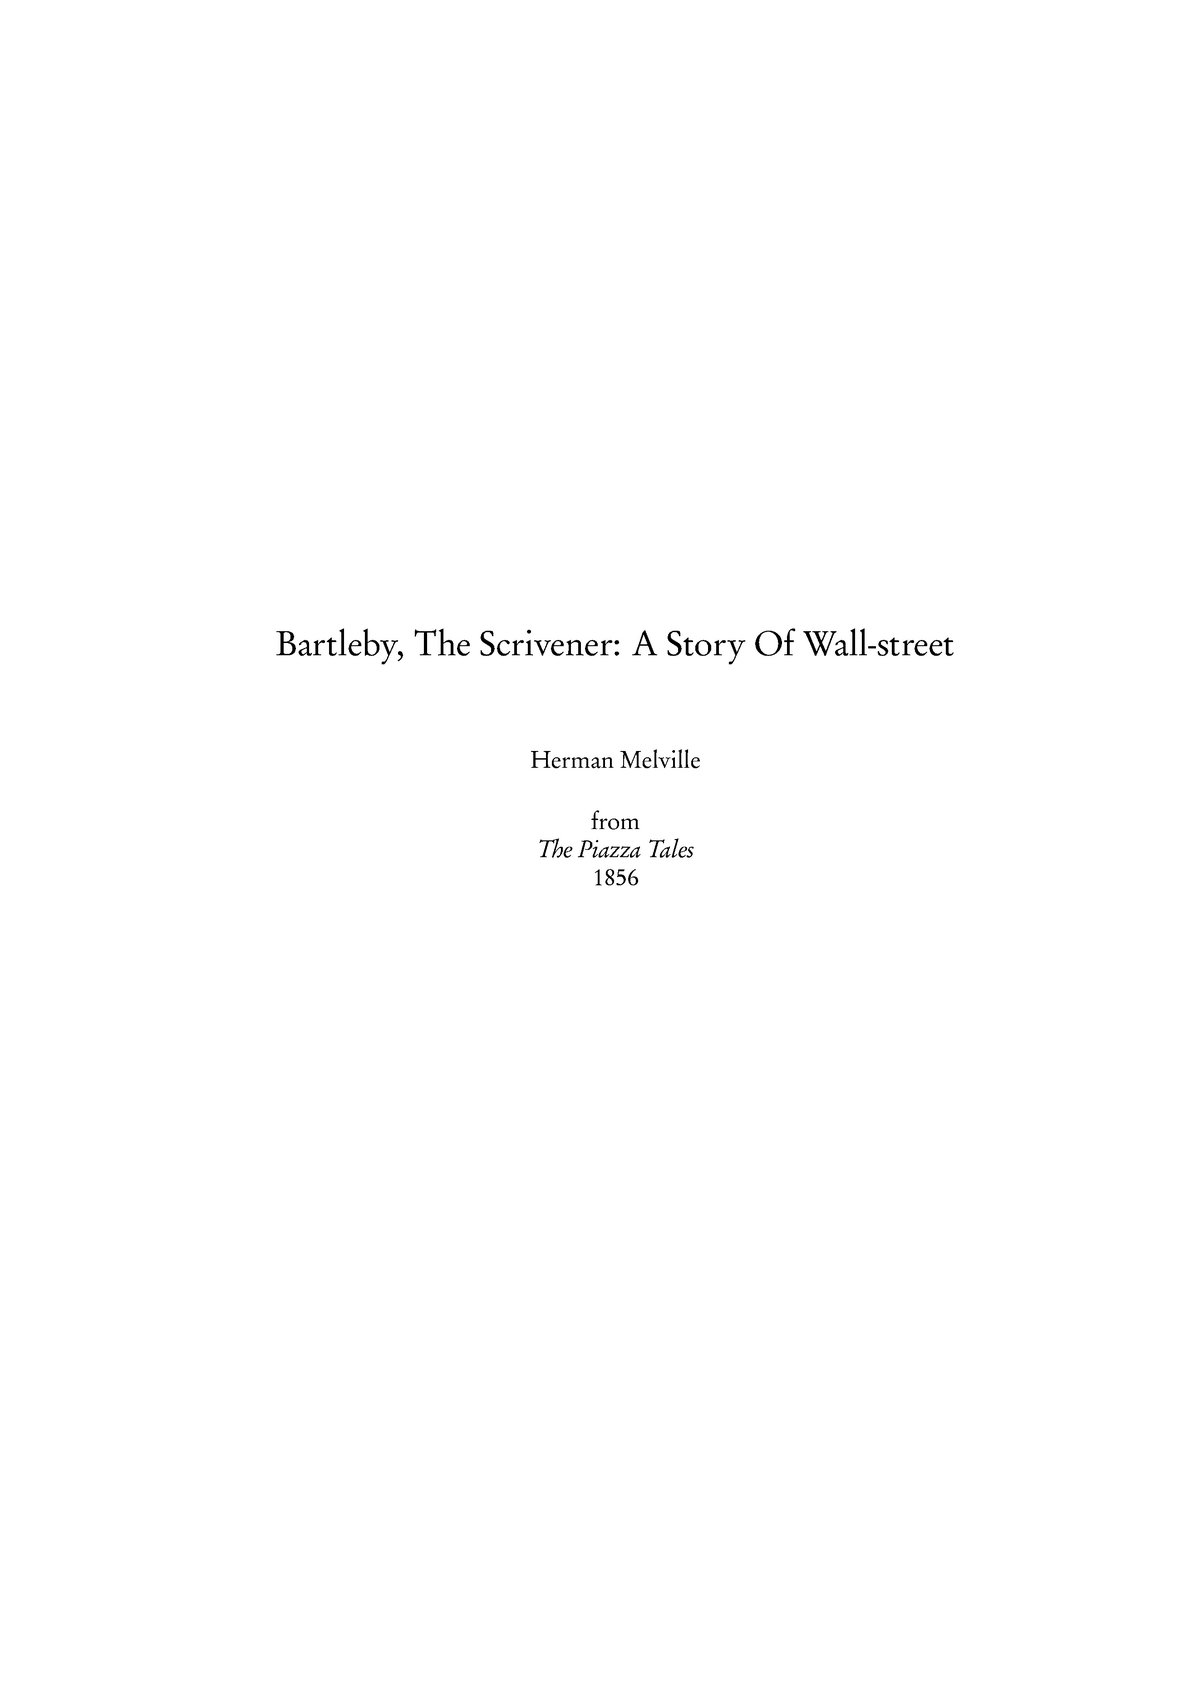 bartleby the scrivener analysis pdf